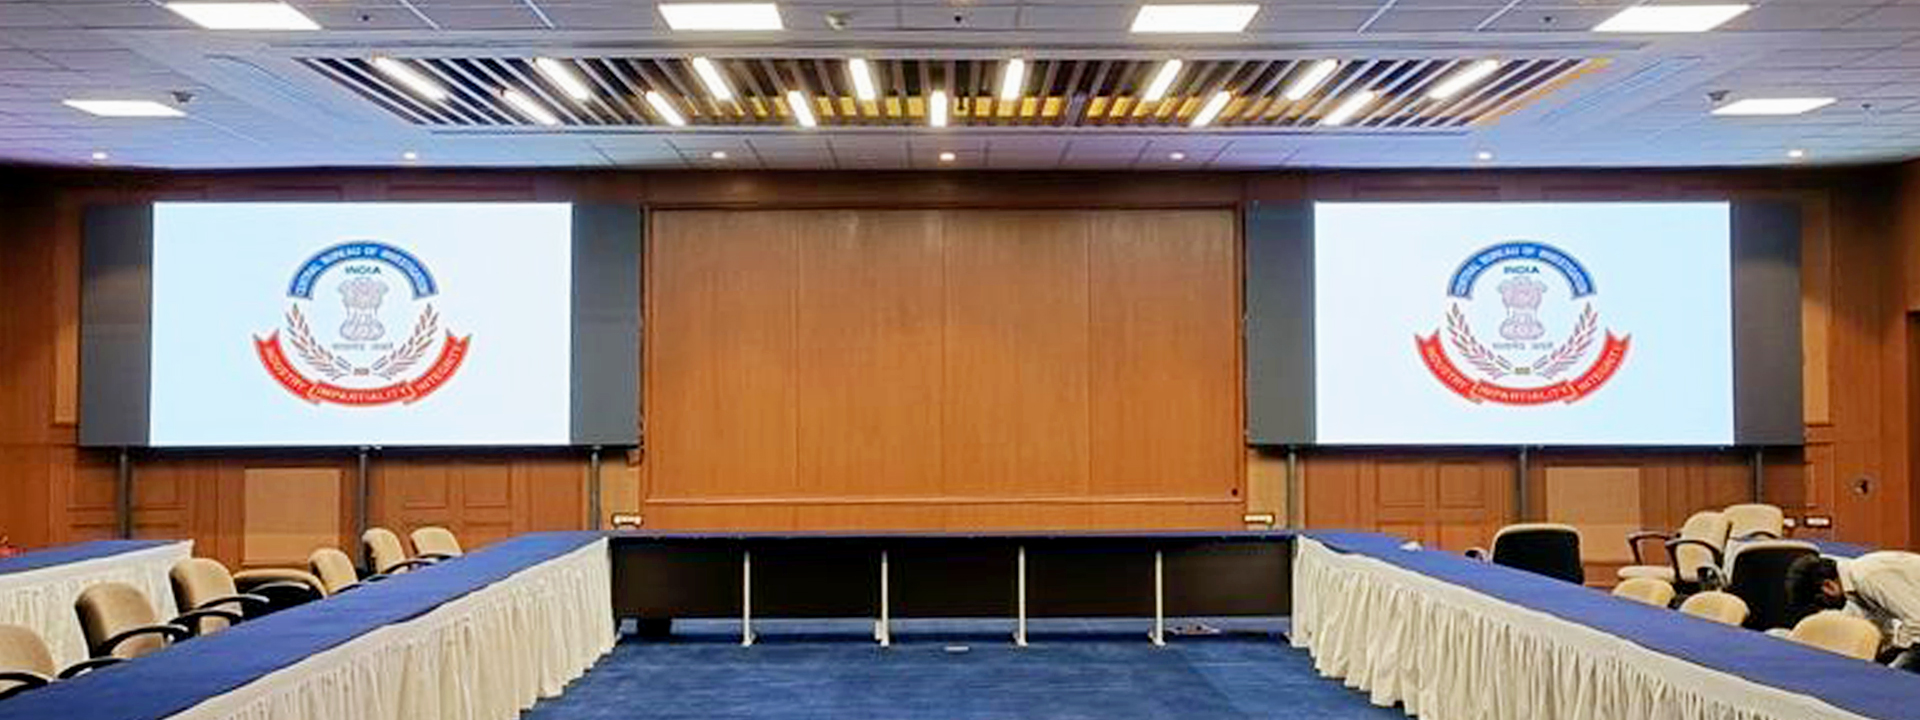 Boardroom Display solution in CBI